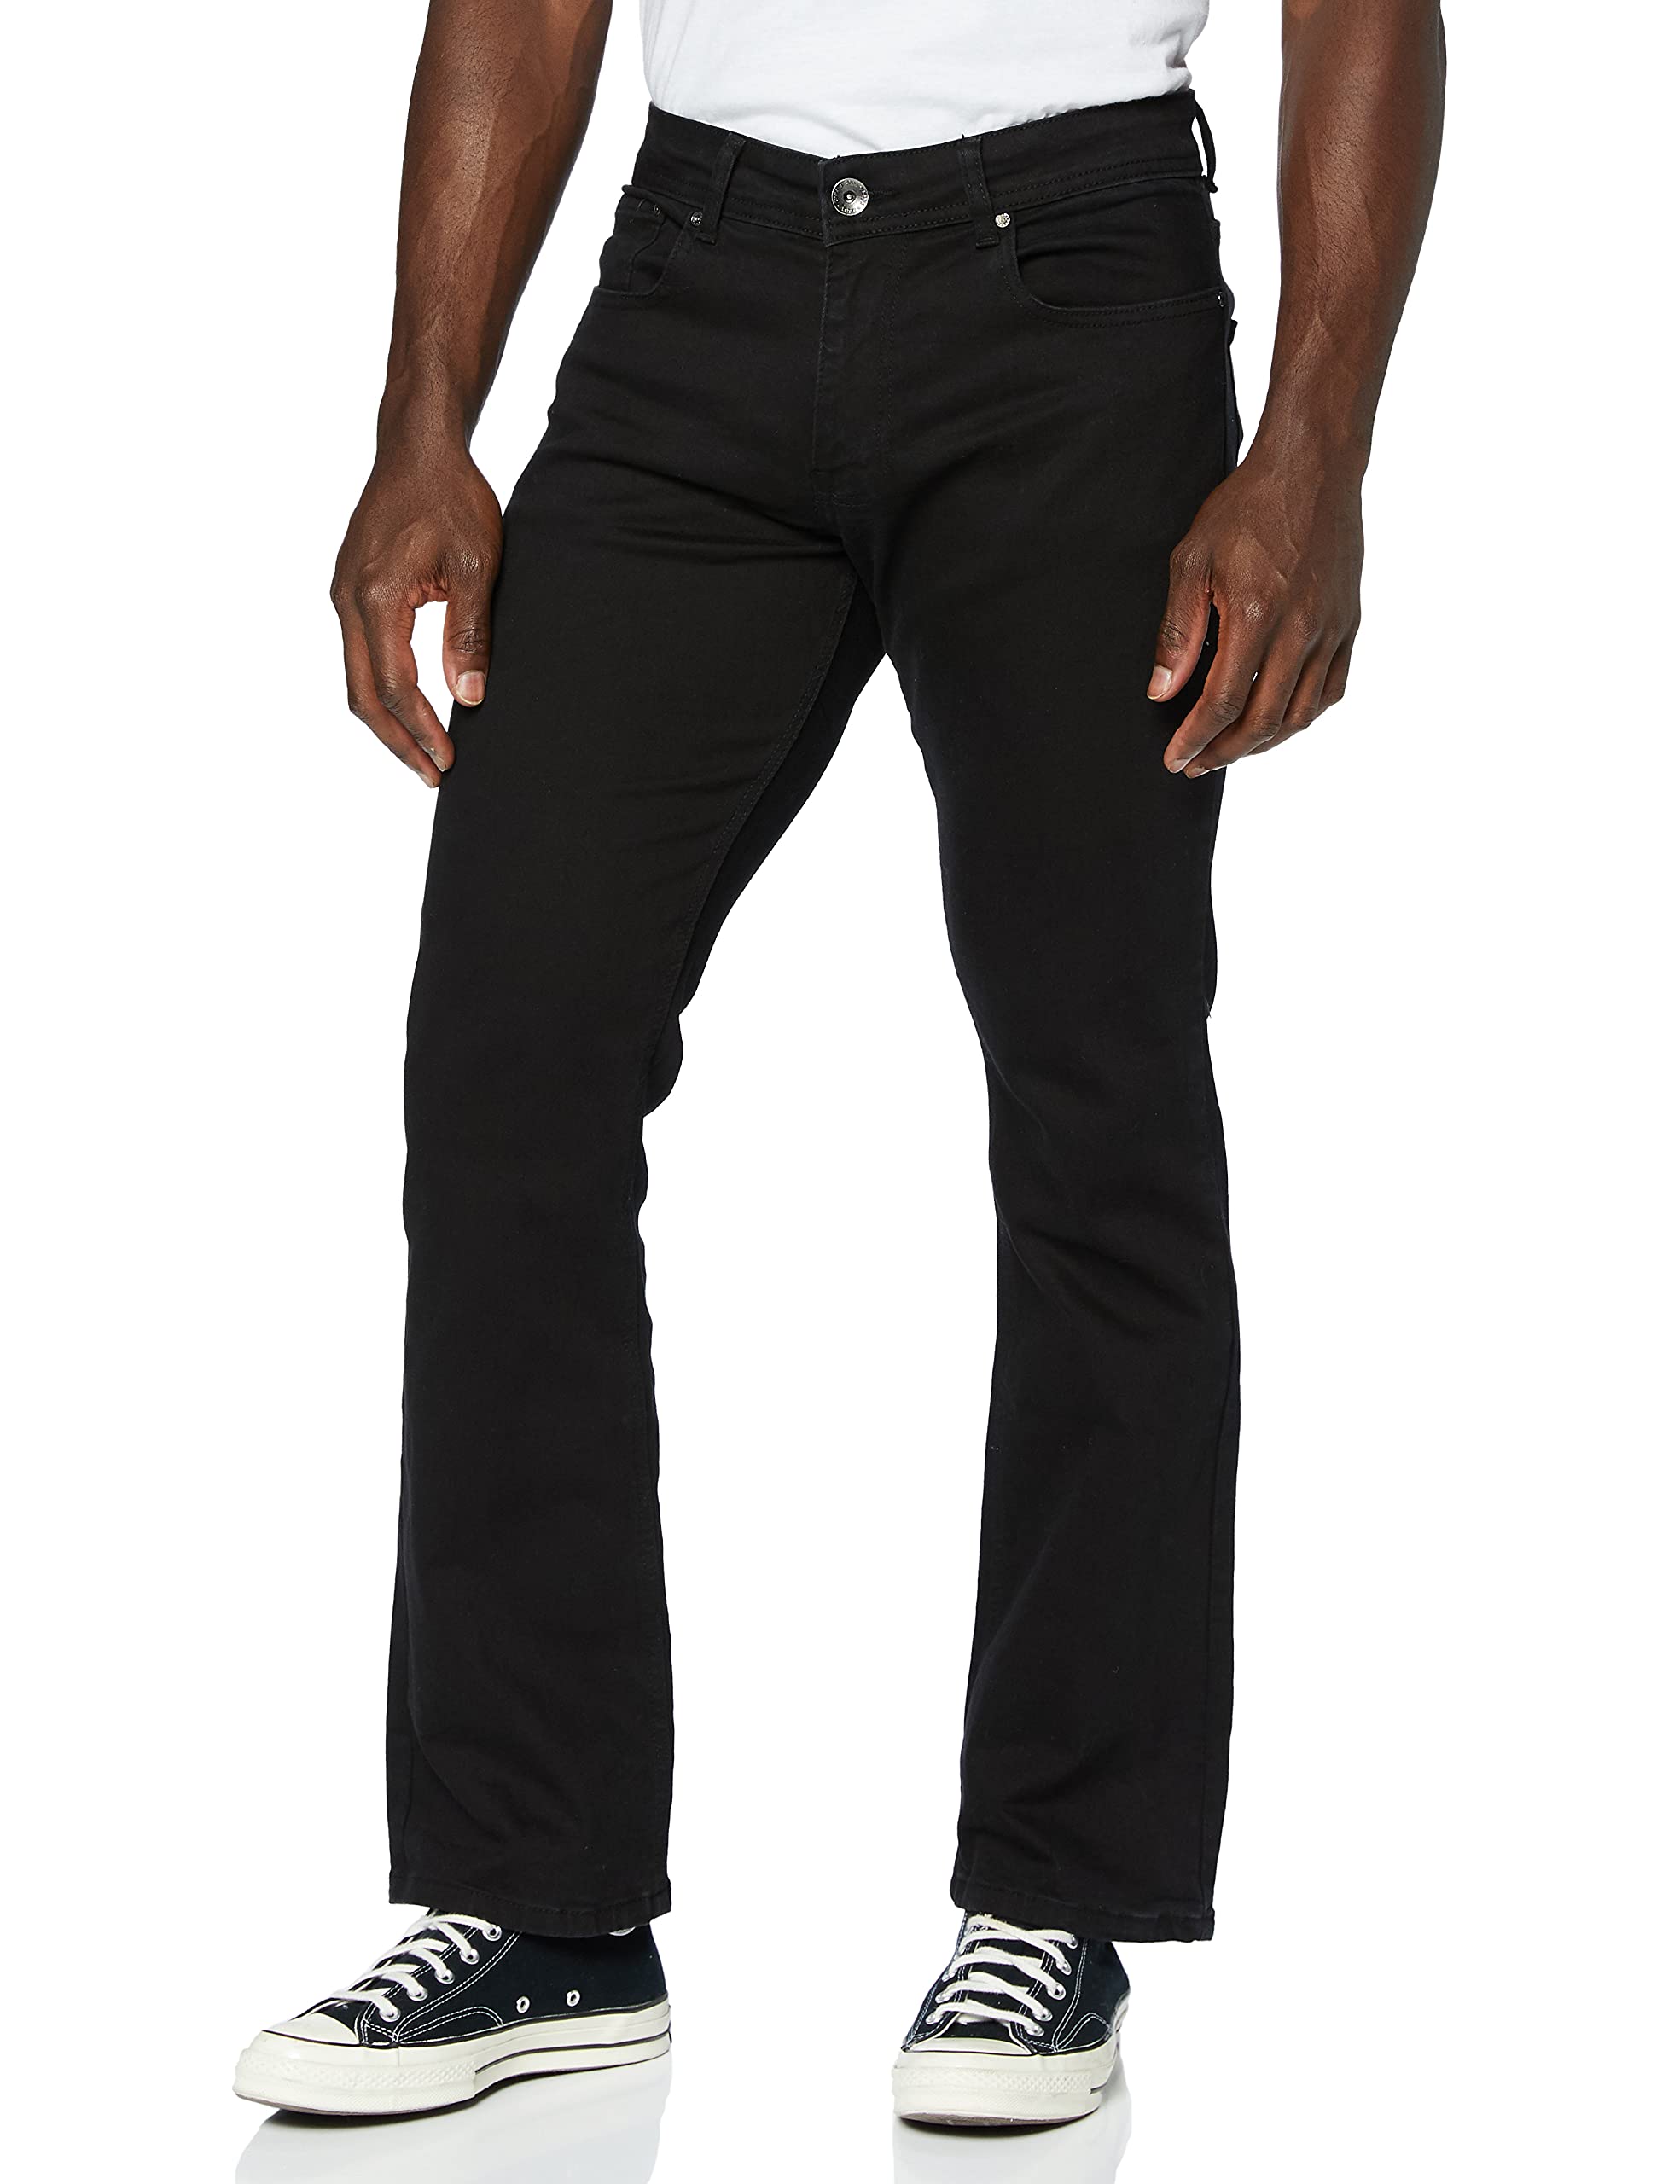 Enzo Herren Ez401 Bootcut Jeans, Schwarz (Black Blk), 40W / 30L